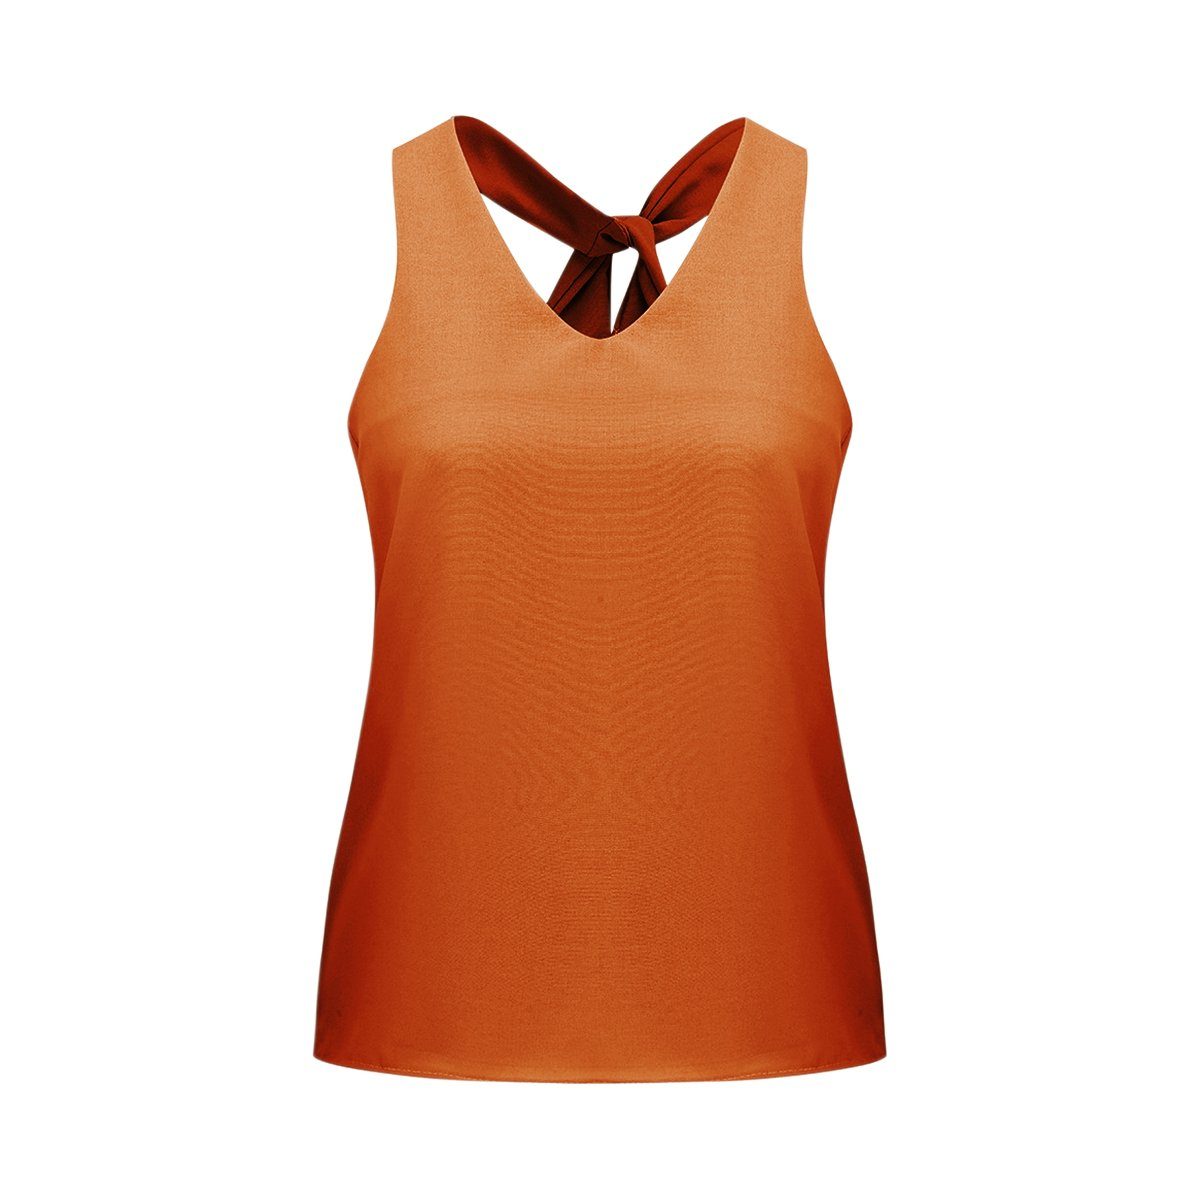 DEBAIJIA Longweste Damen Sommer Tank Top V-Ausschnitt Ärmellose Top Lässige Unterhemd Orange